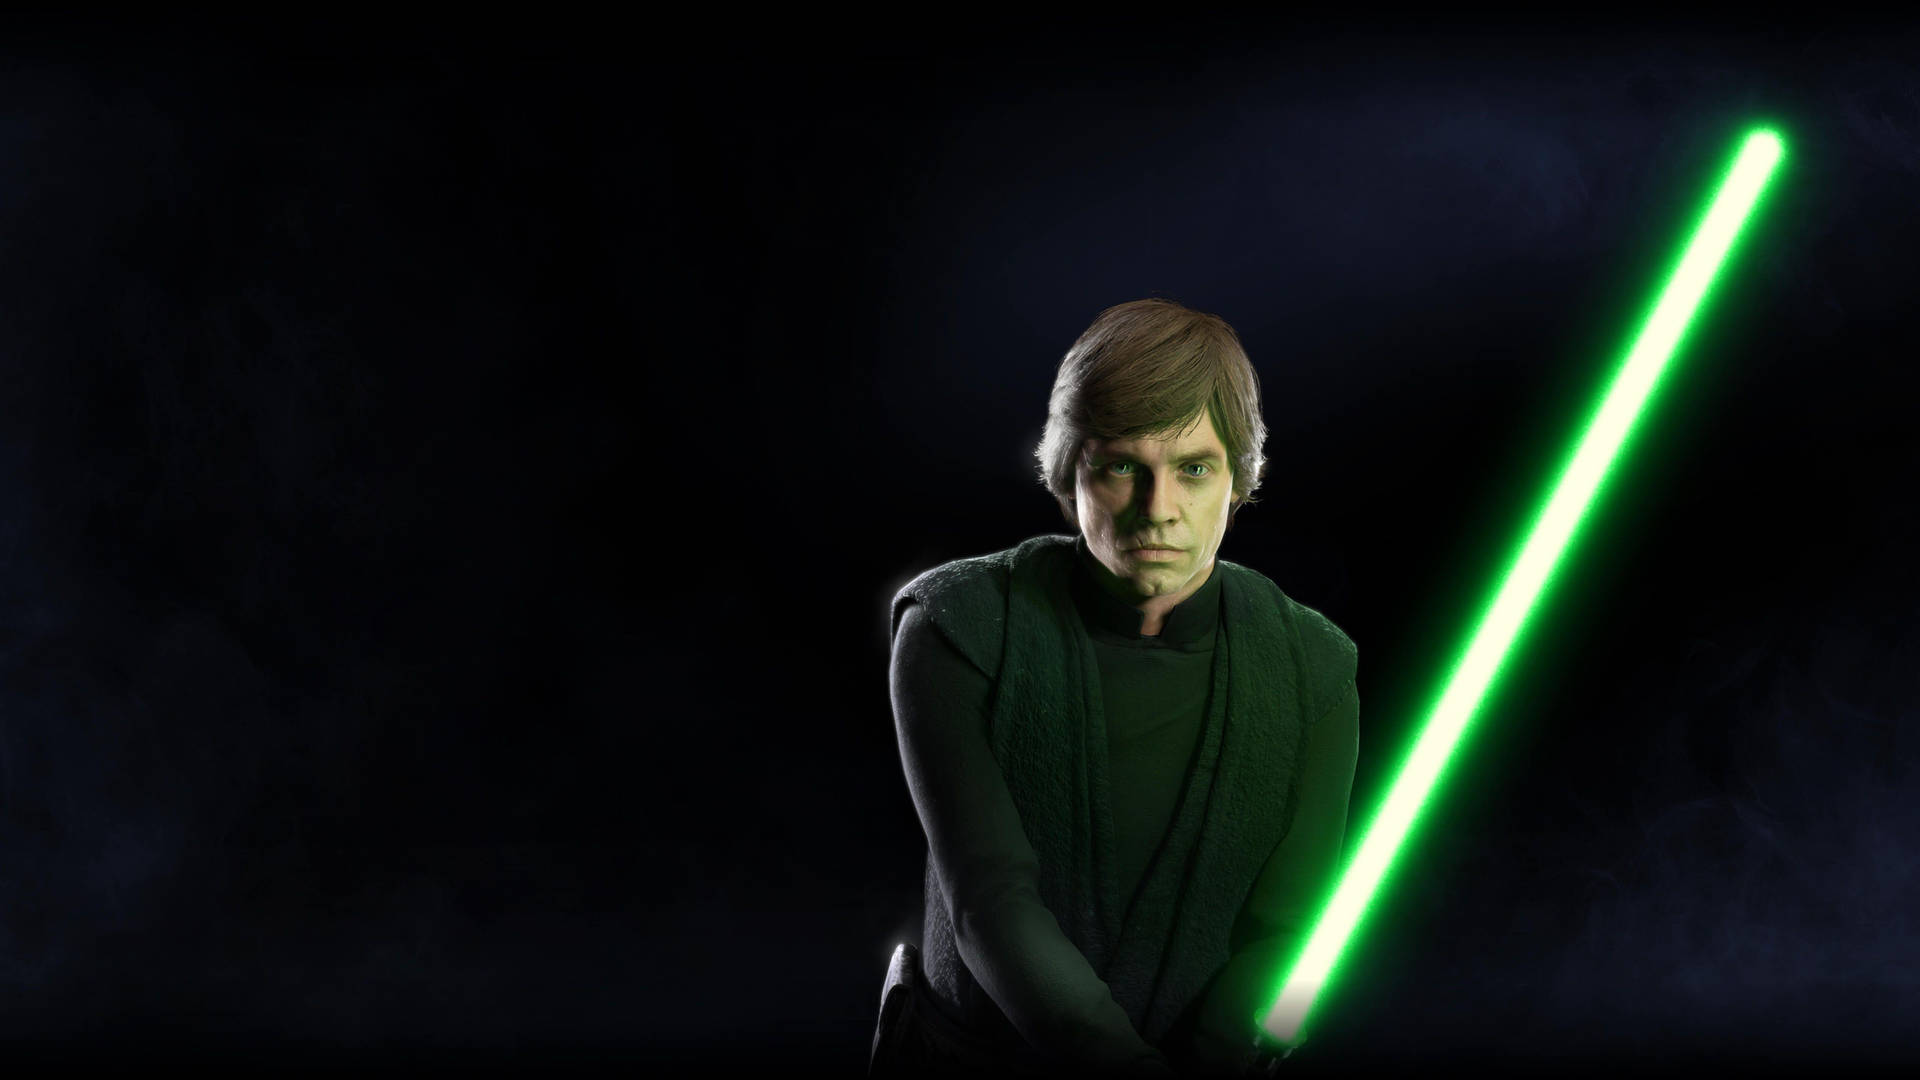 "Born to be a Jedi, Luke Skywalker wields a light saber like none other." Wallpaper